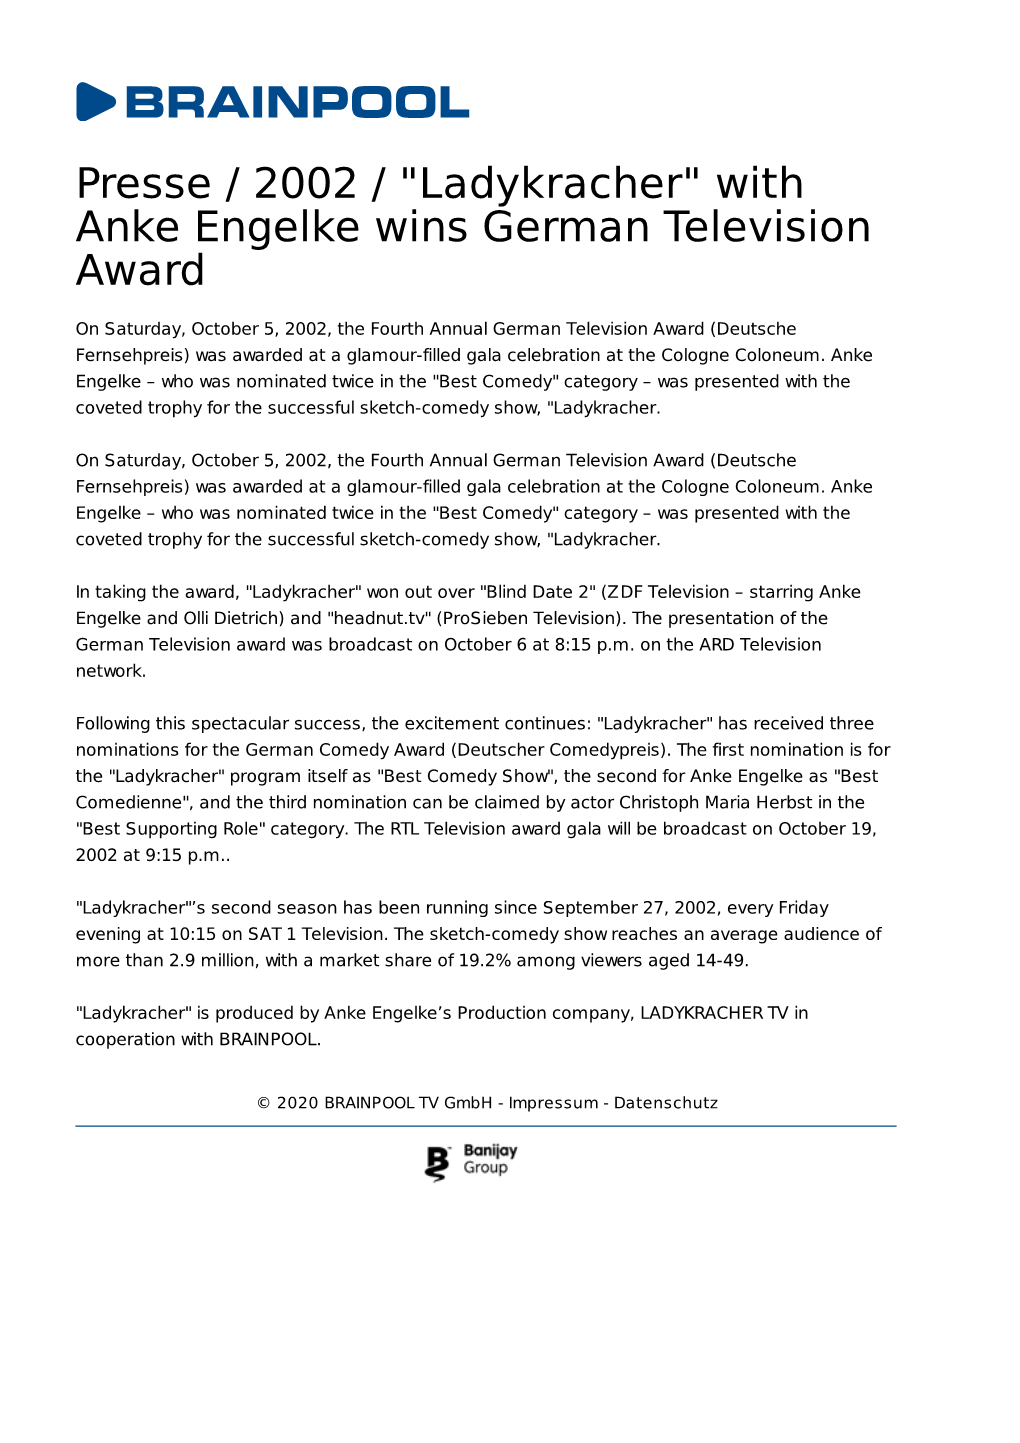 "Ladykracher" with Anke Engelke Wins German Television Award